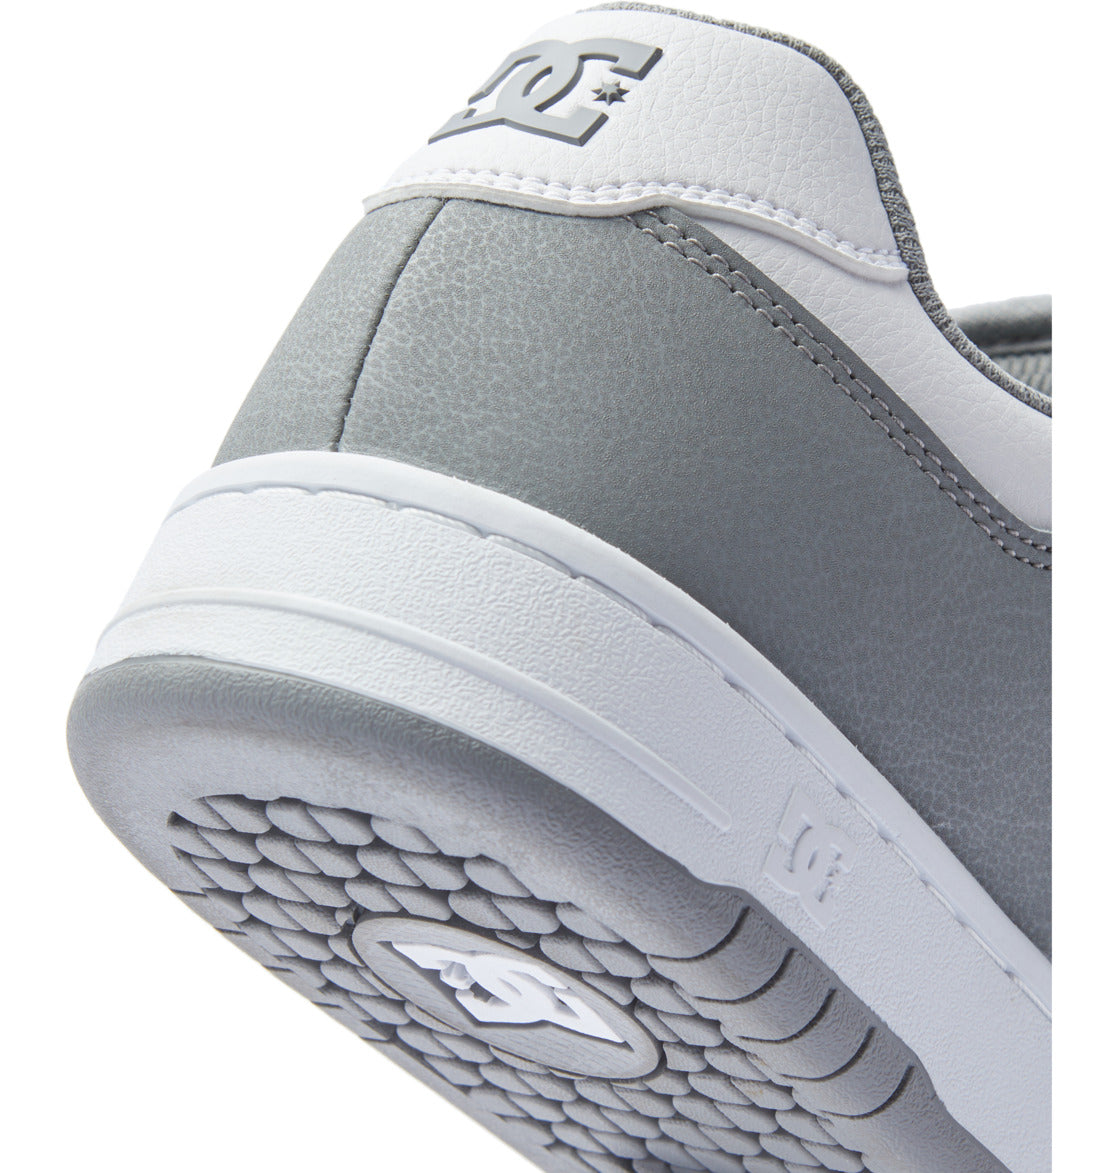 Zapatilla de skate Dc Shoes Manteca 4 - White Grey | Calzado | Zapatillas | surfdevils.com